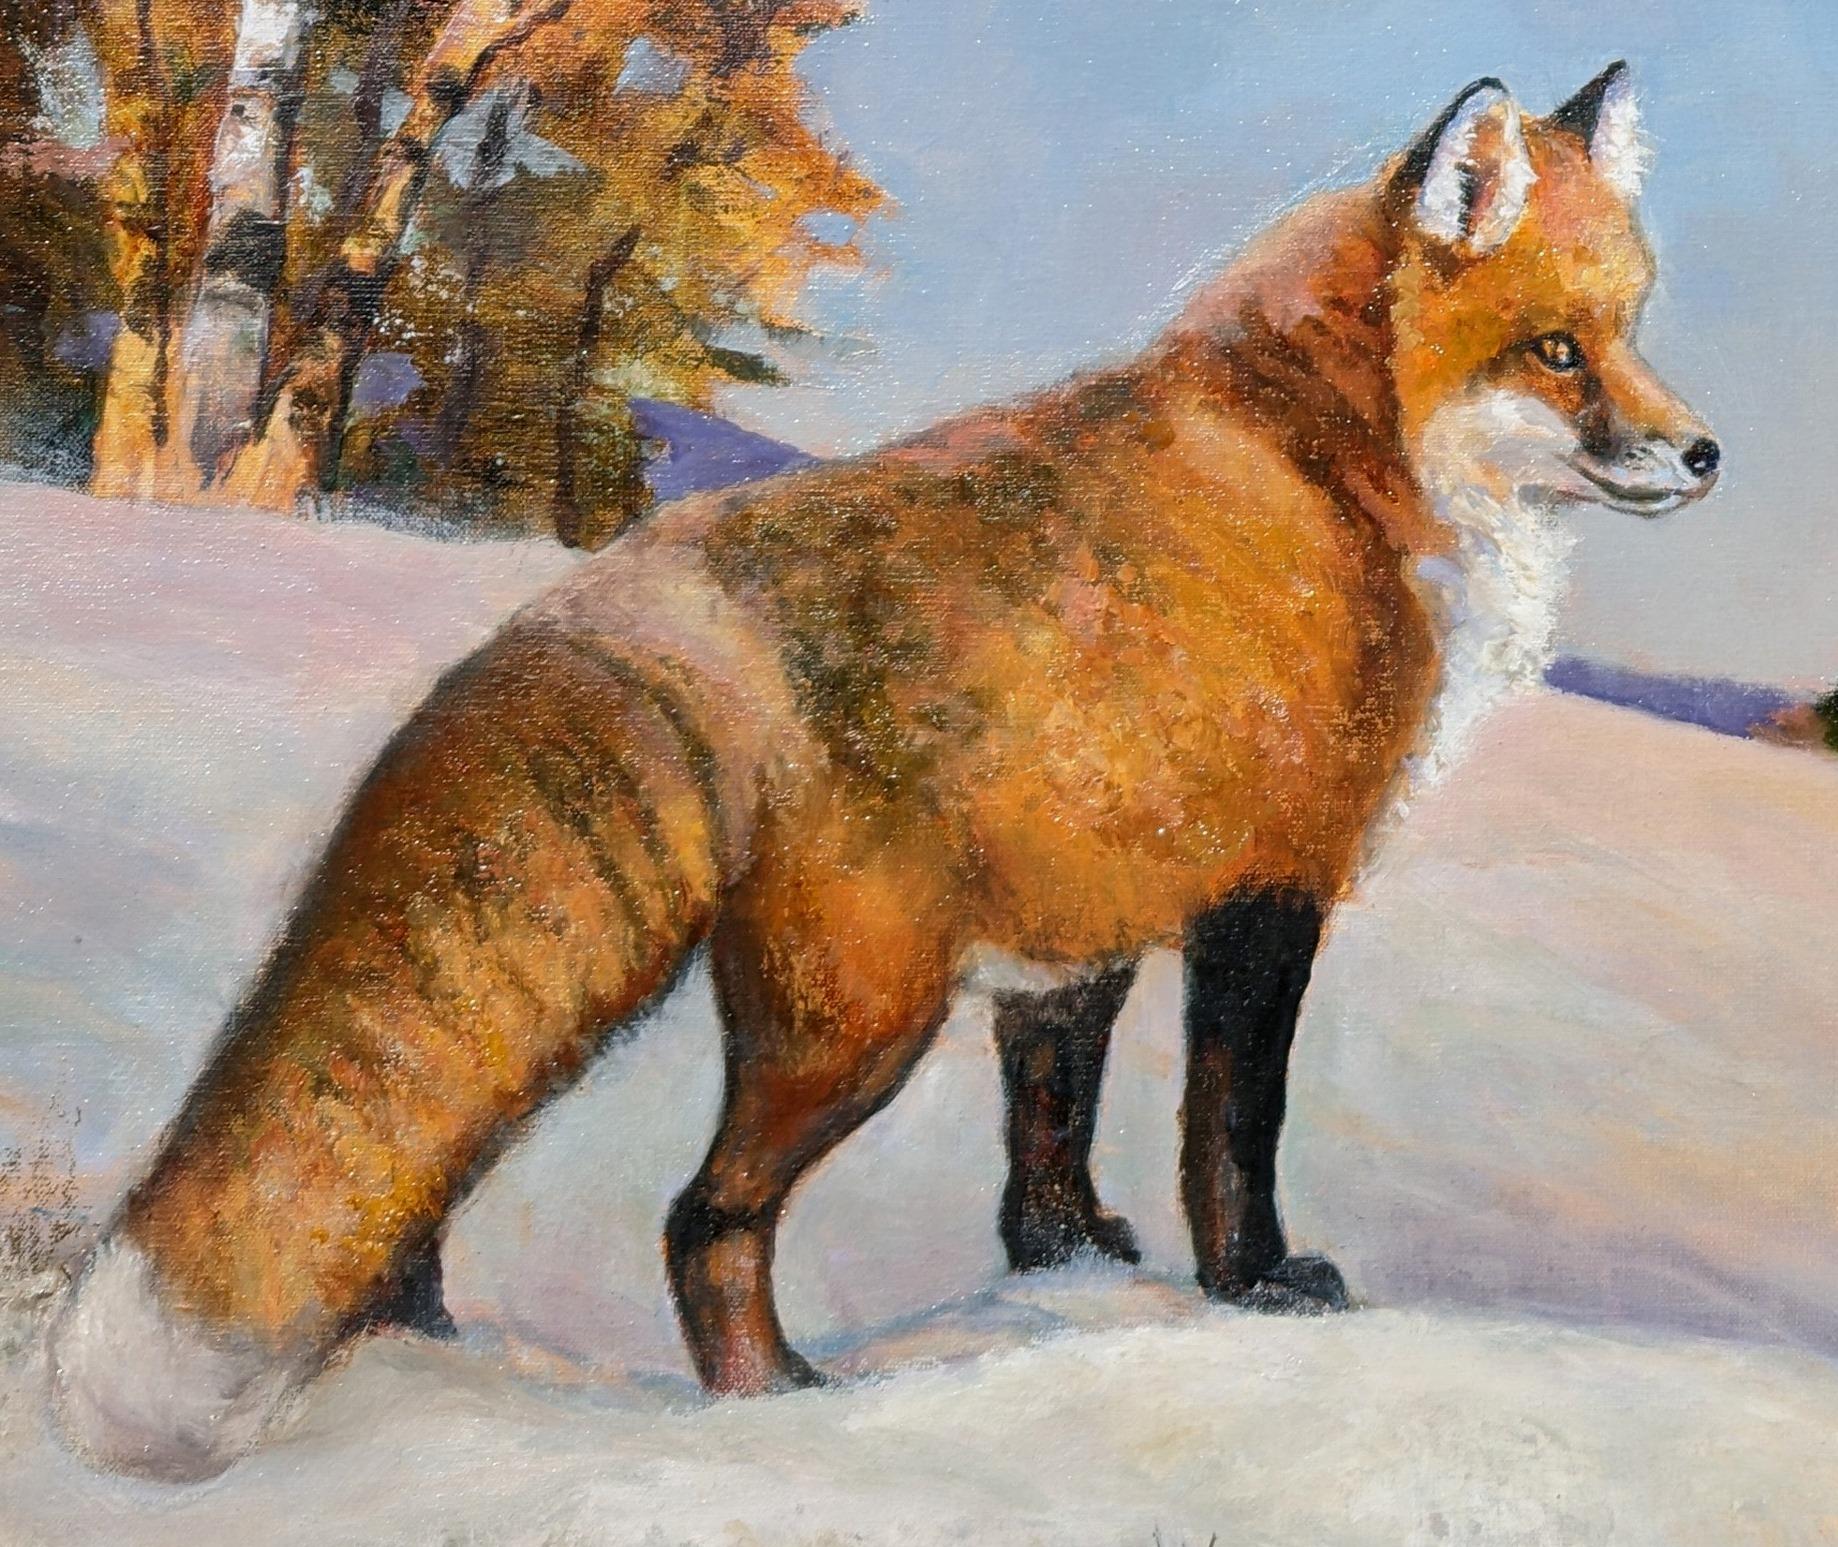 Beth Carlson's dramatic fox painting, titled 